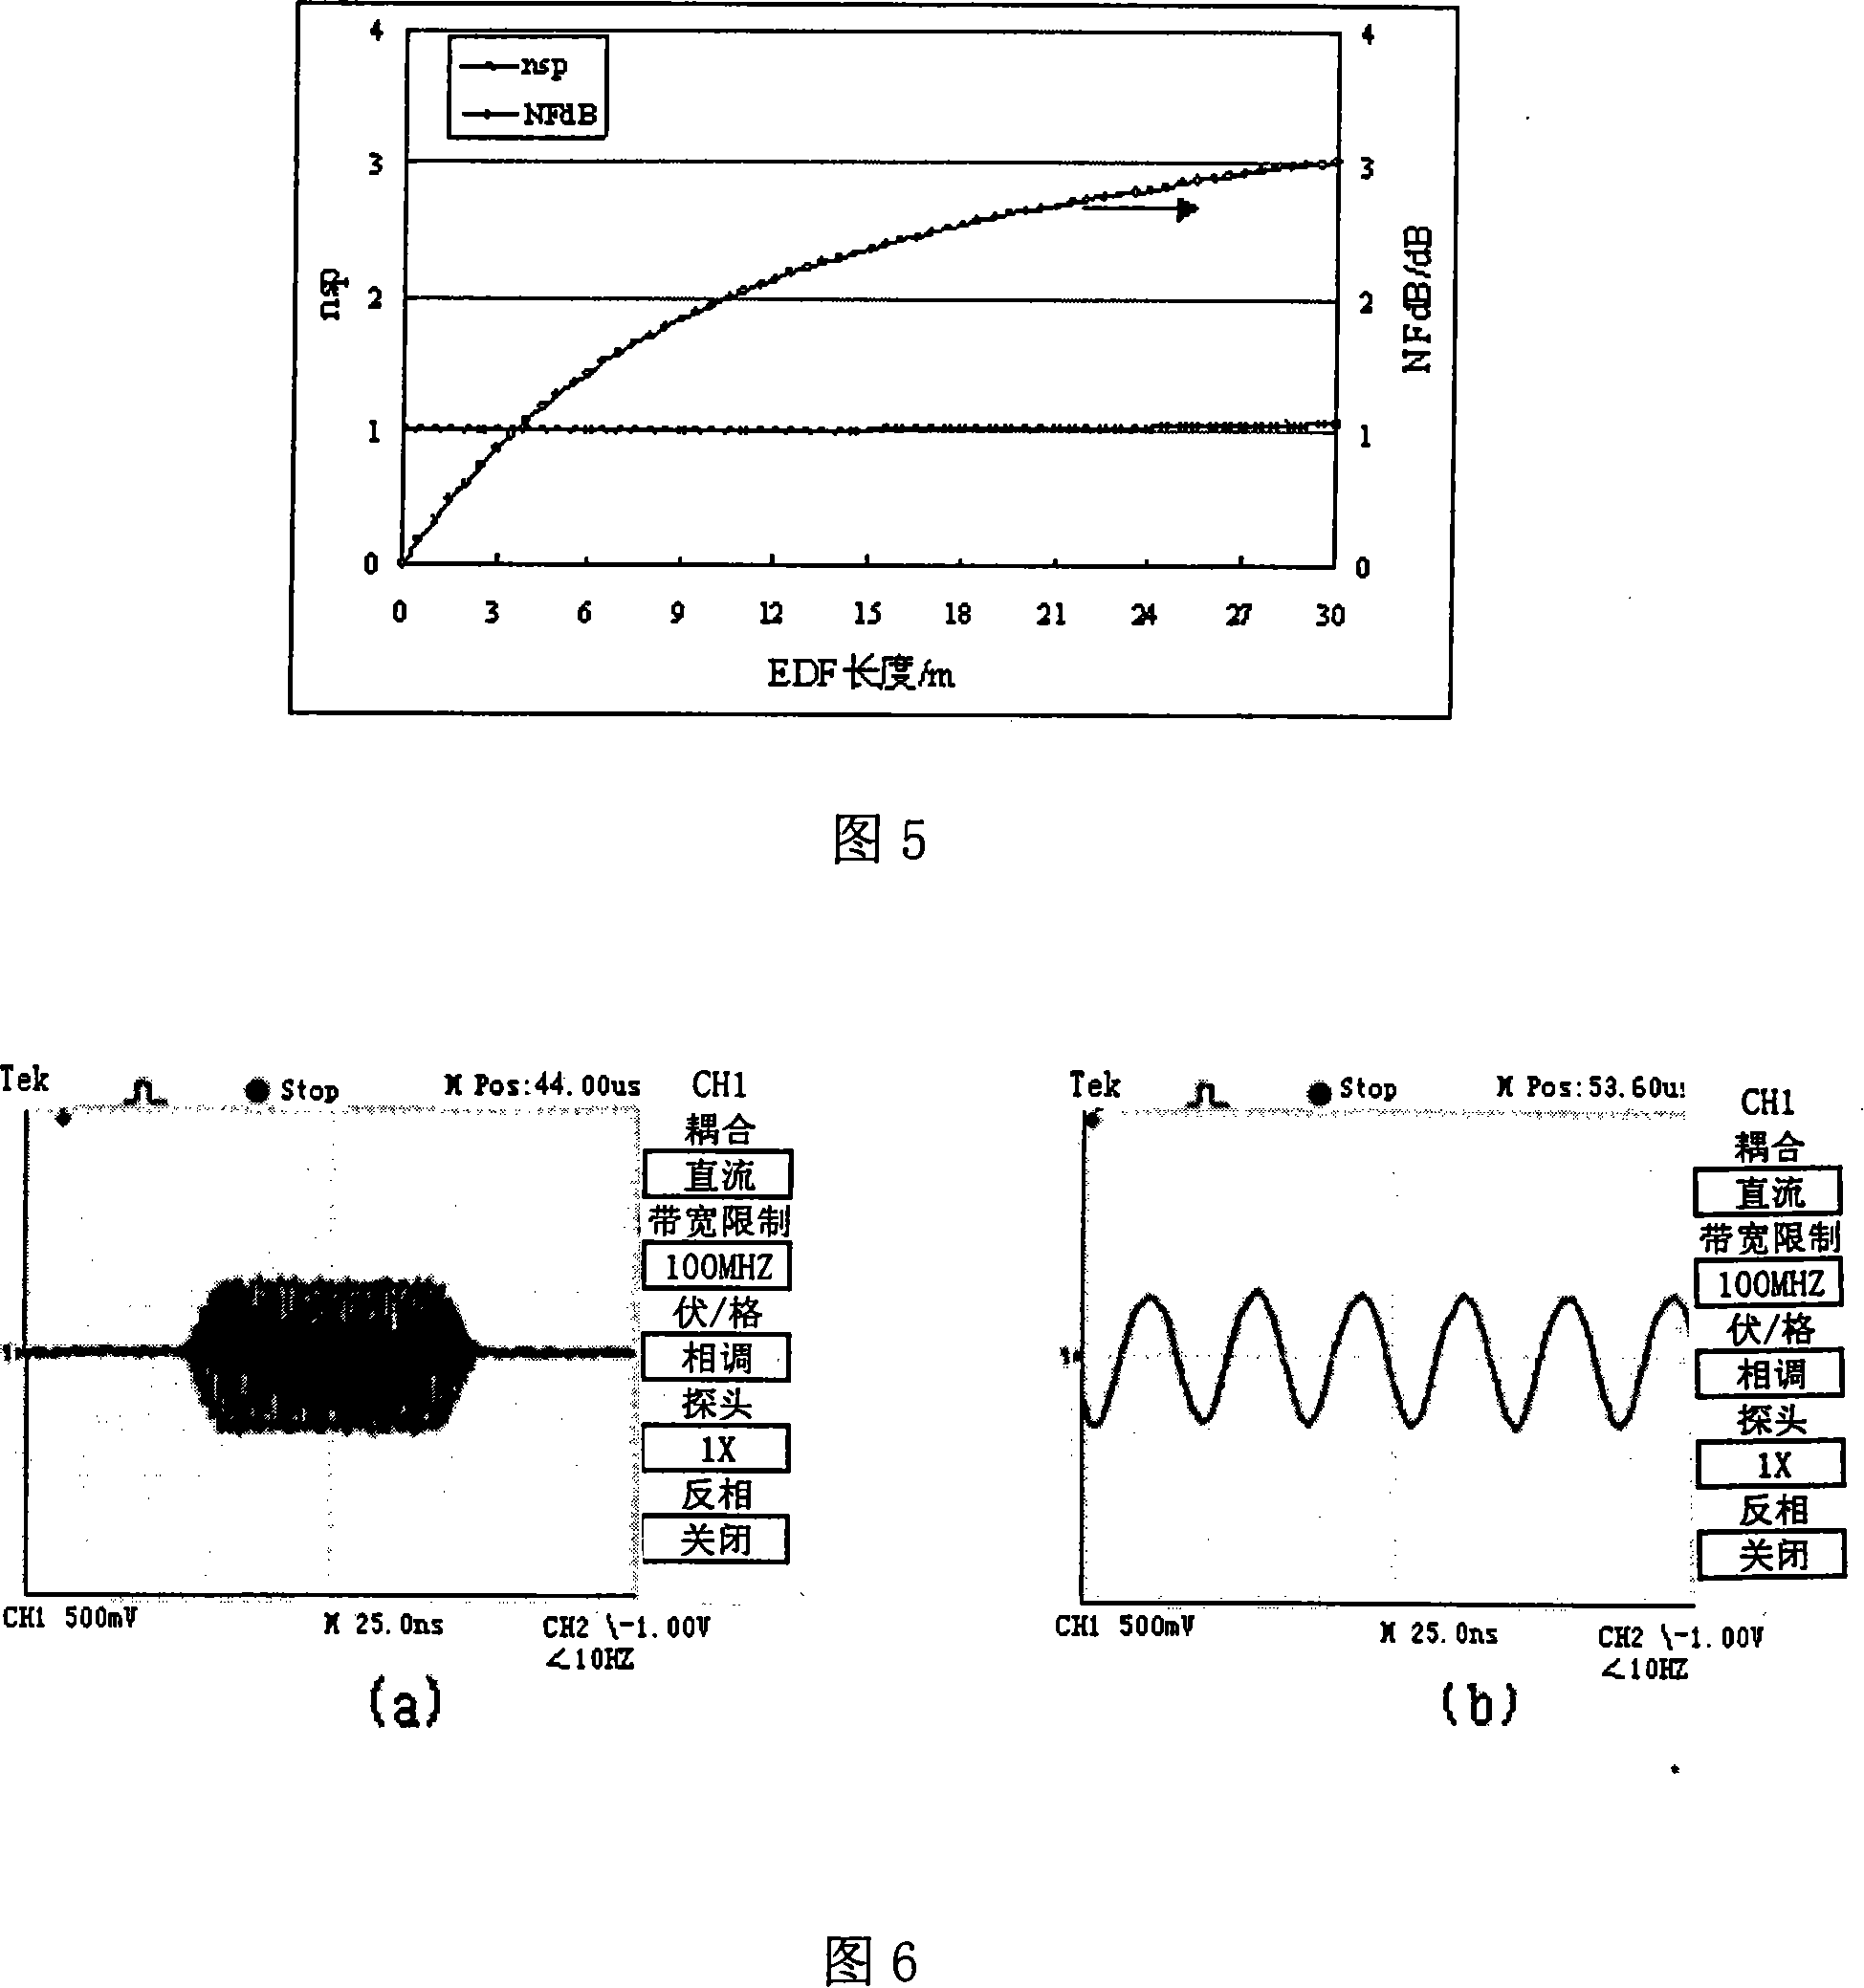 Optical signal replicating system